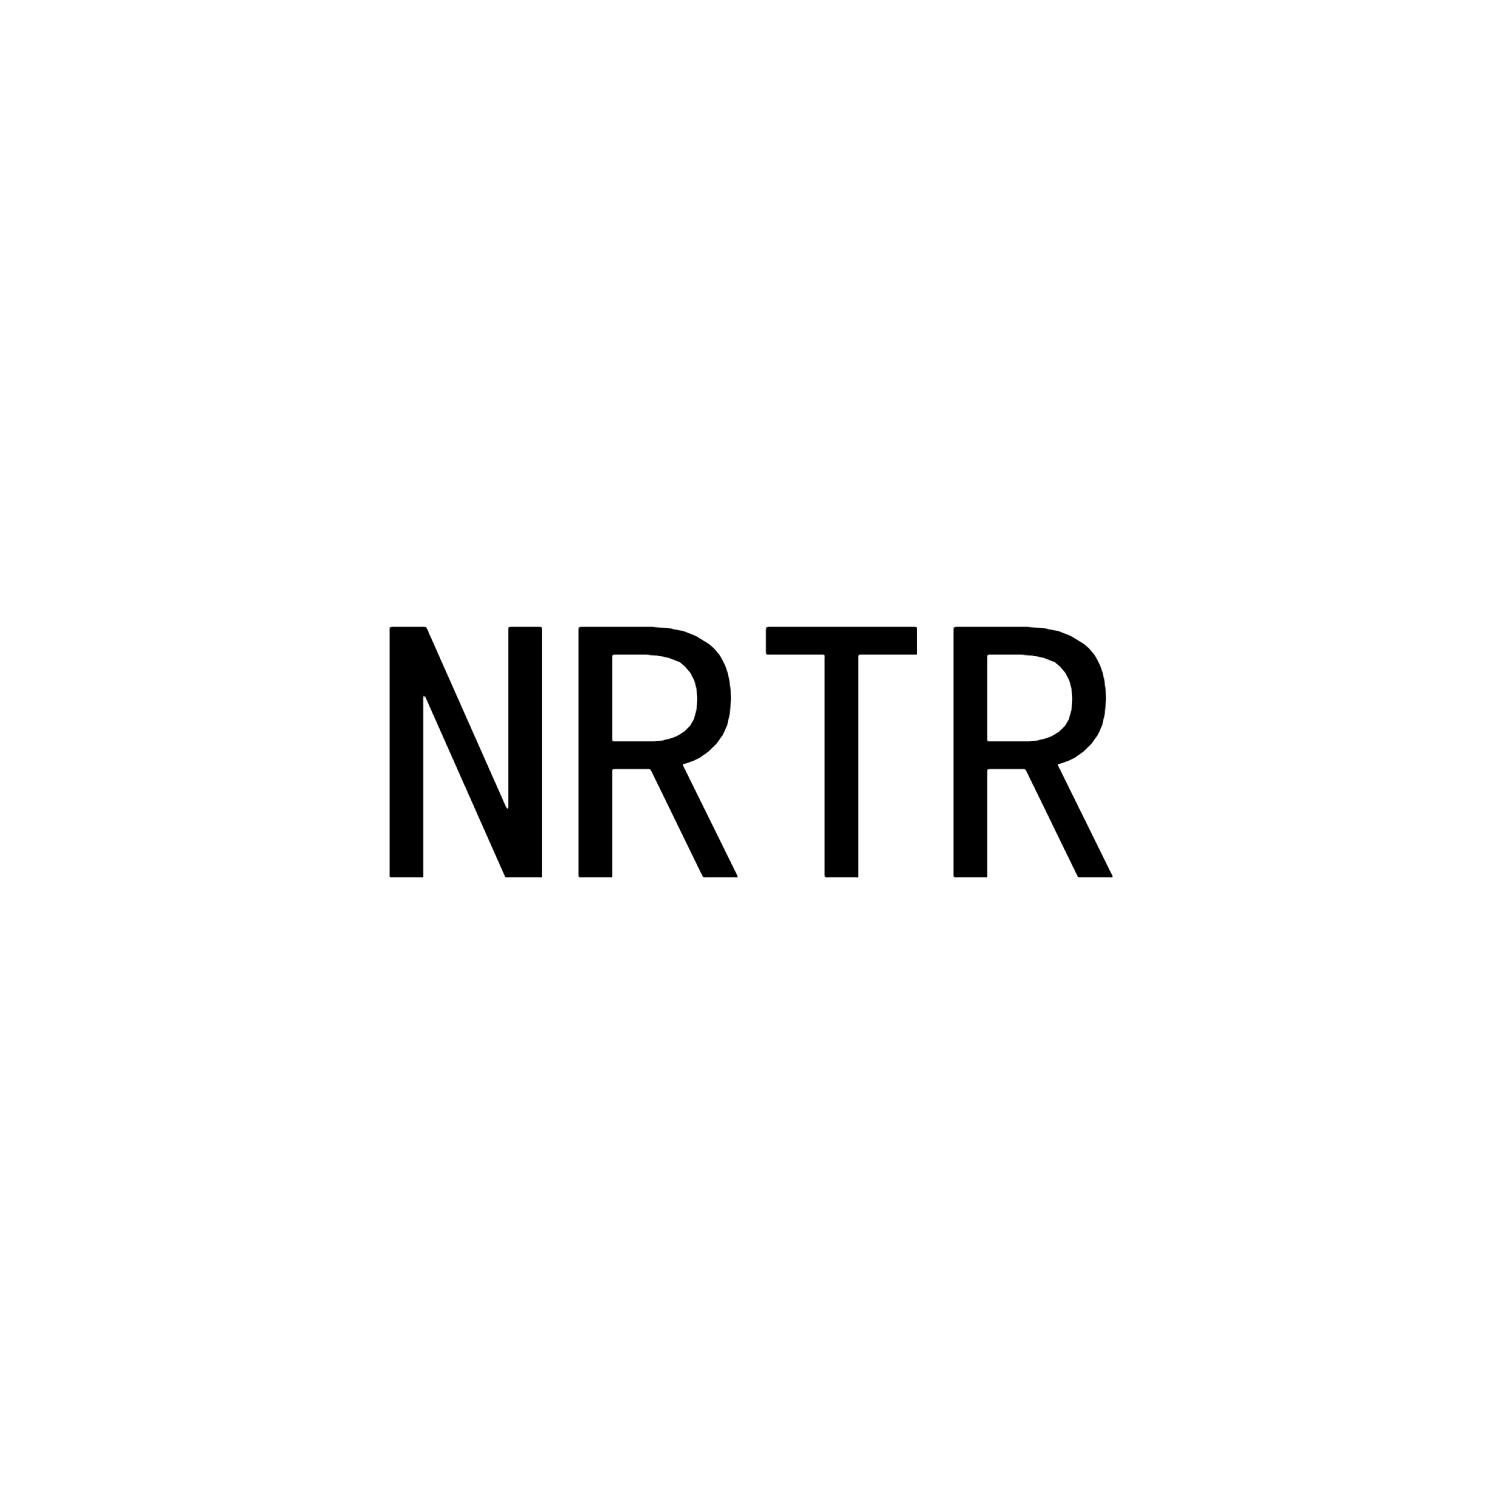 NRTR